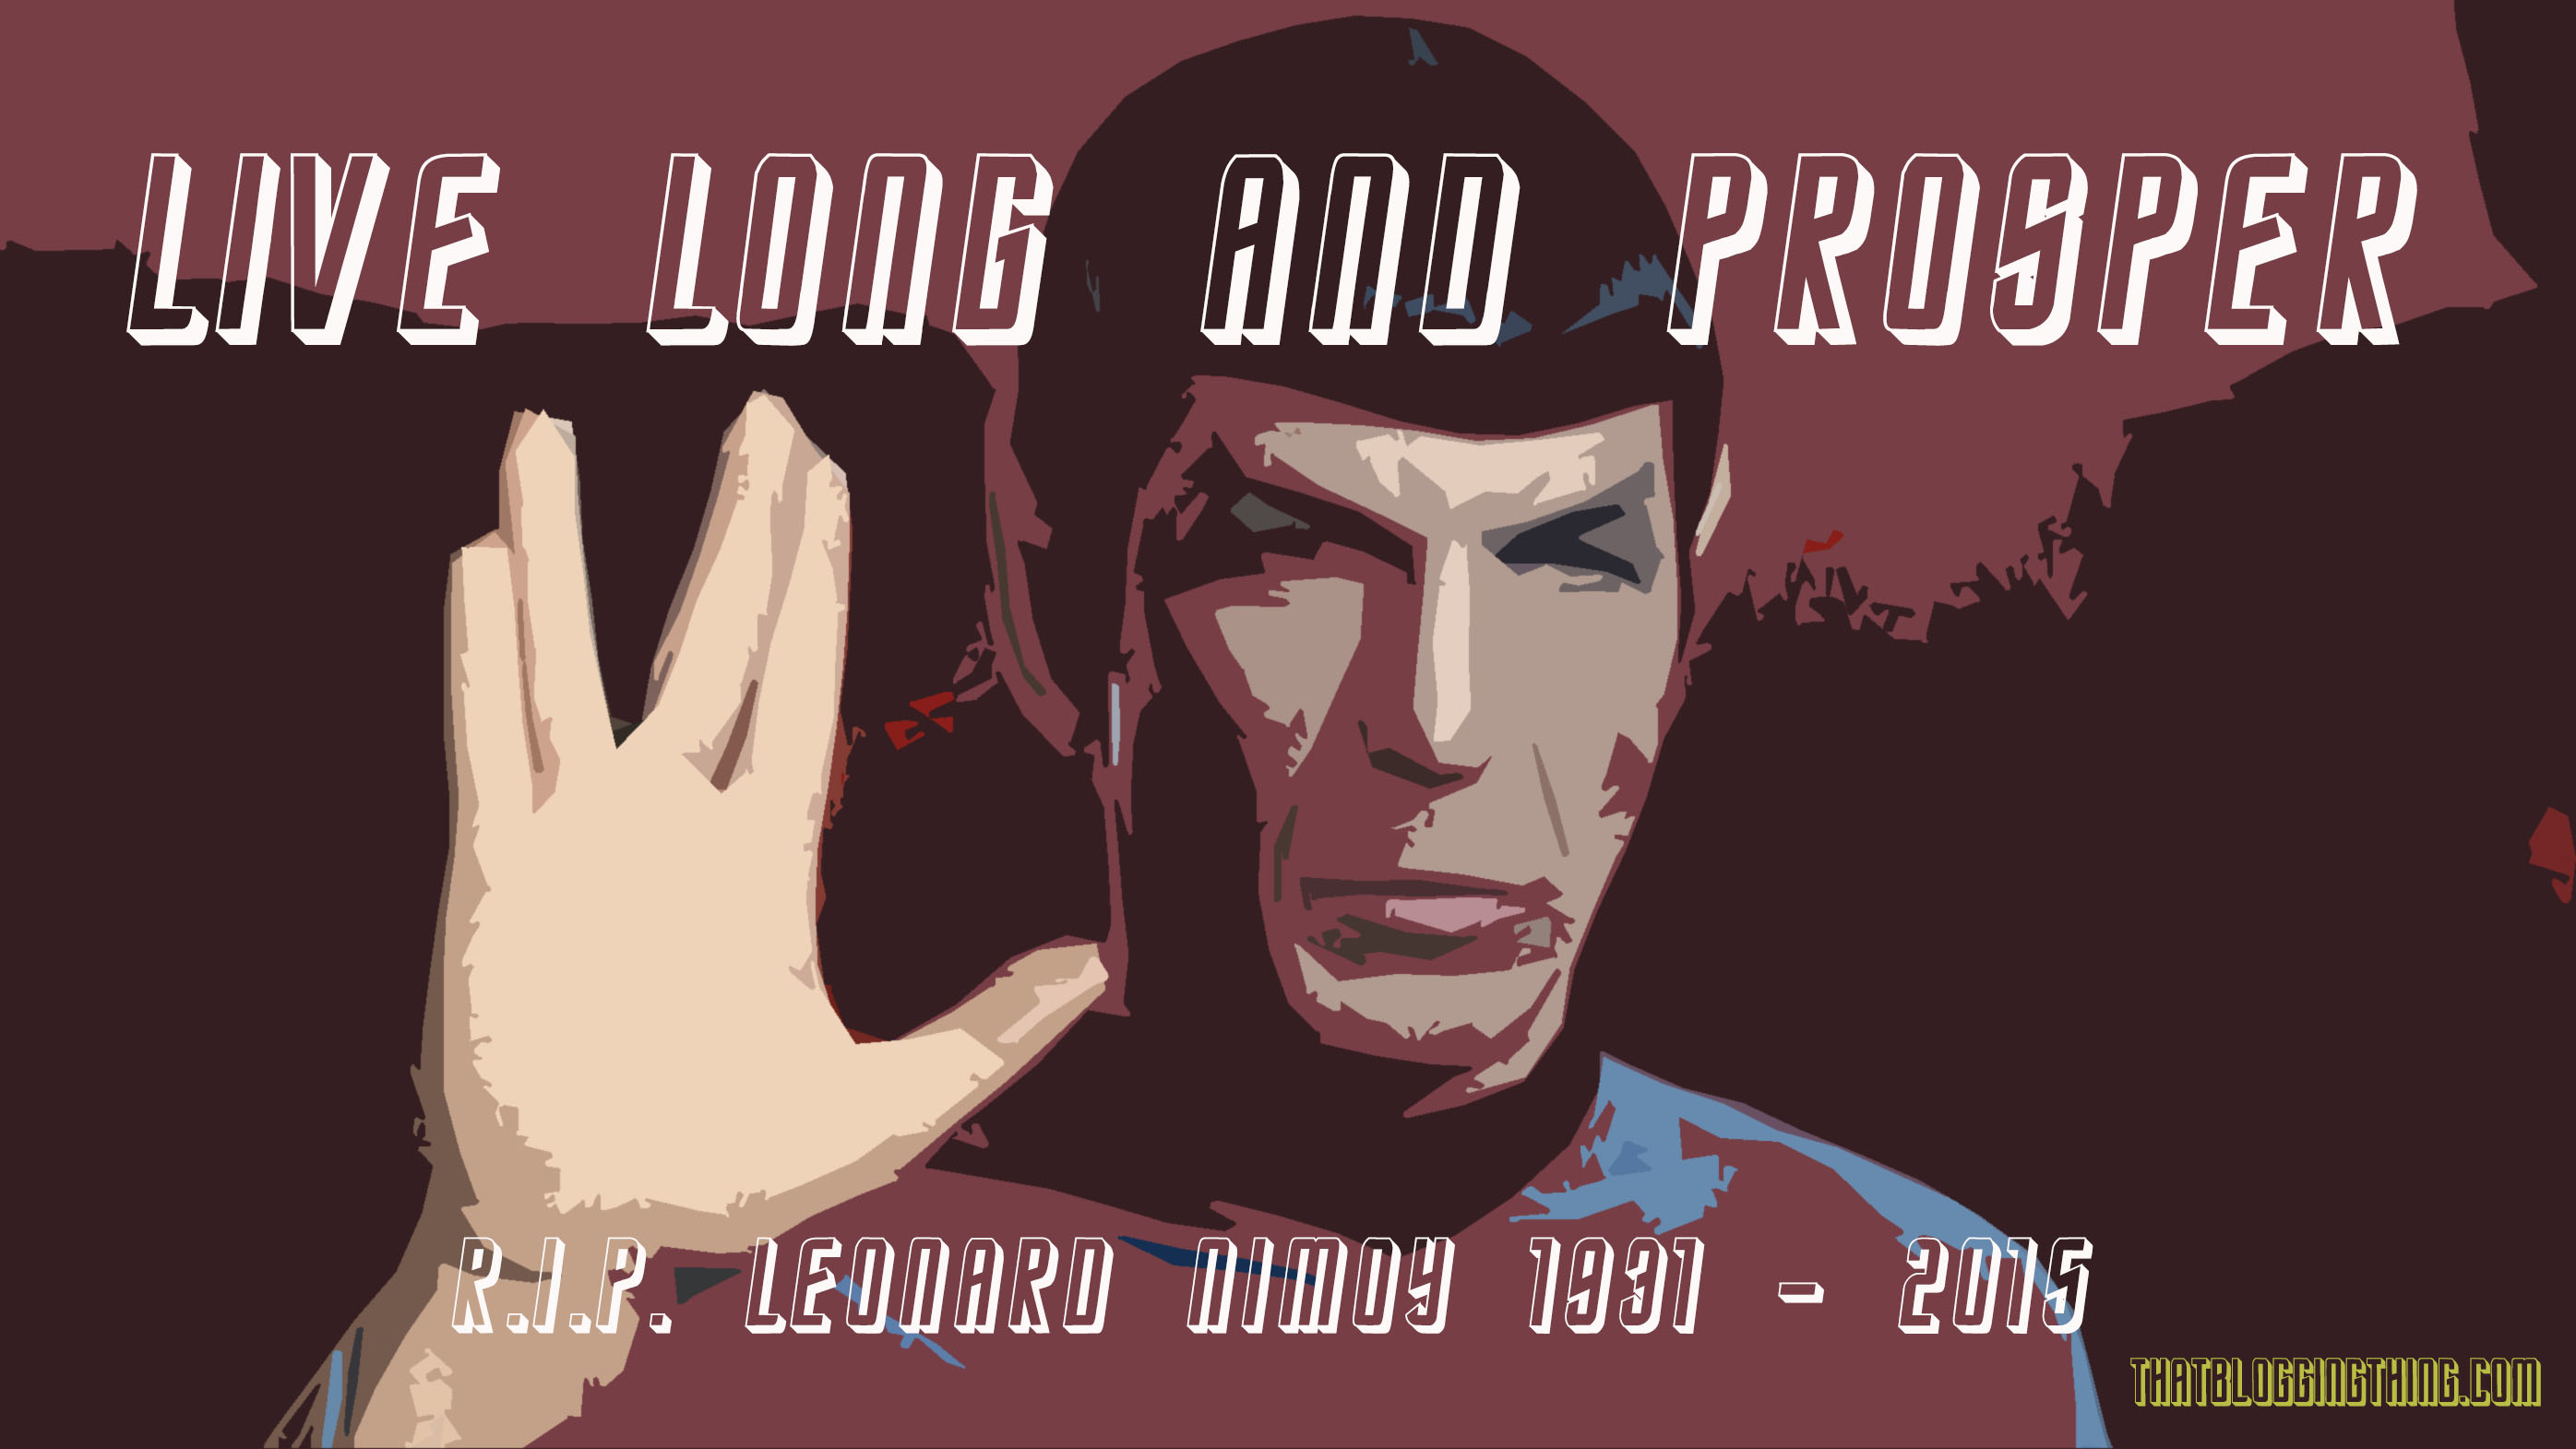 SPOCK: Live long and Prosper